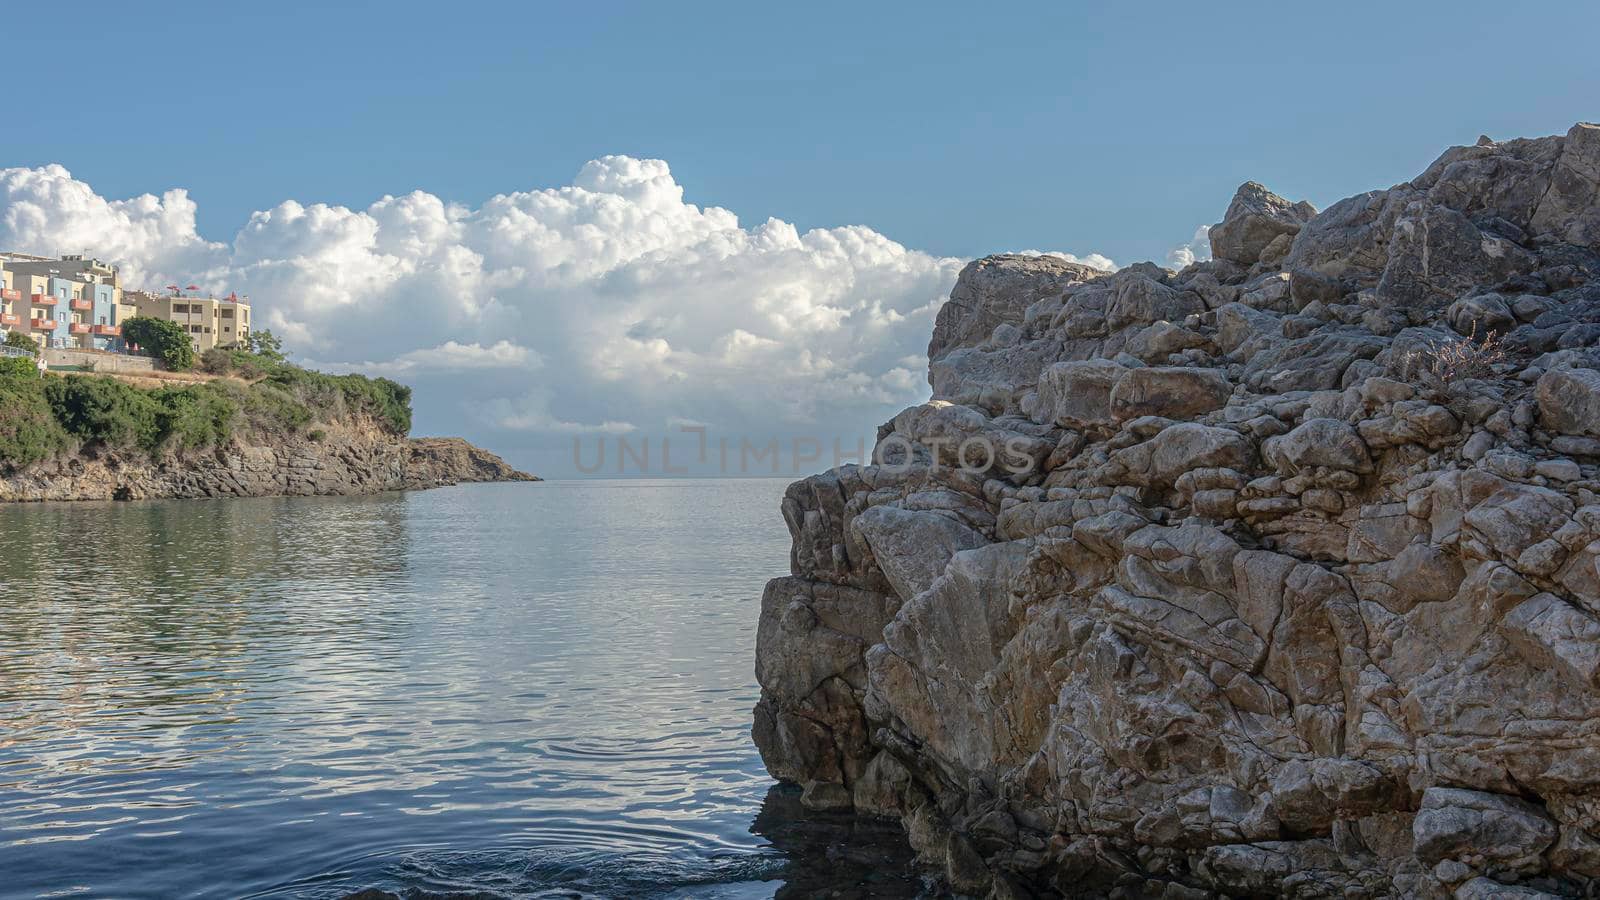 Seascape. Apartments on the rocky seashore (Greece, Crete). Stock photo.